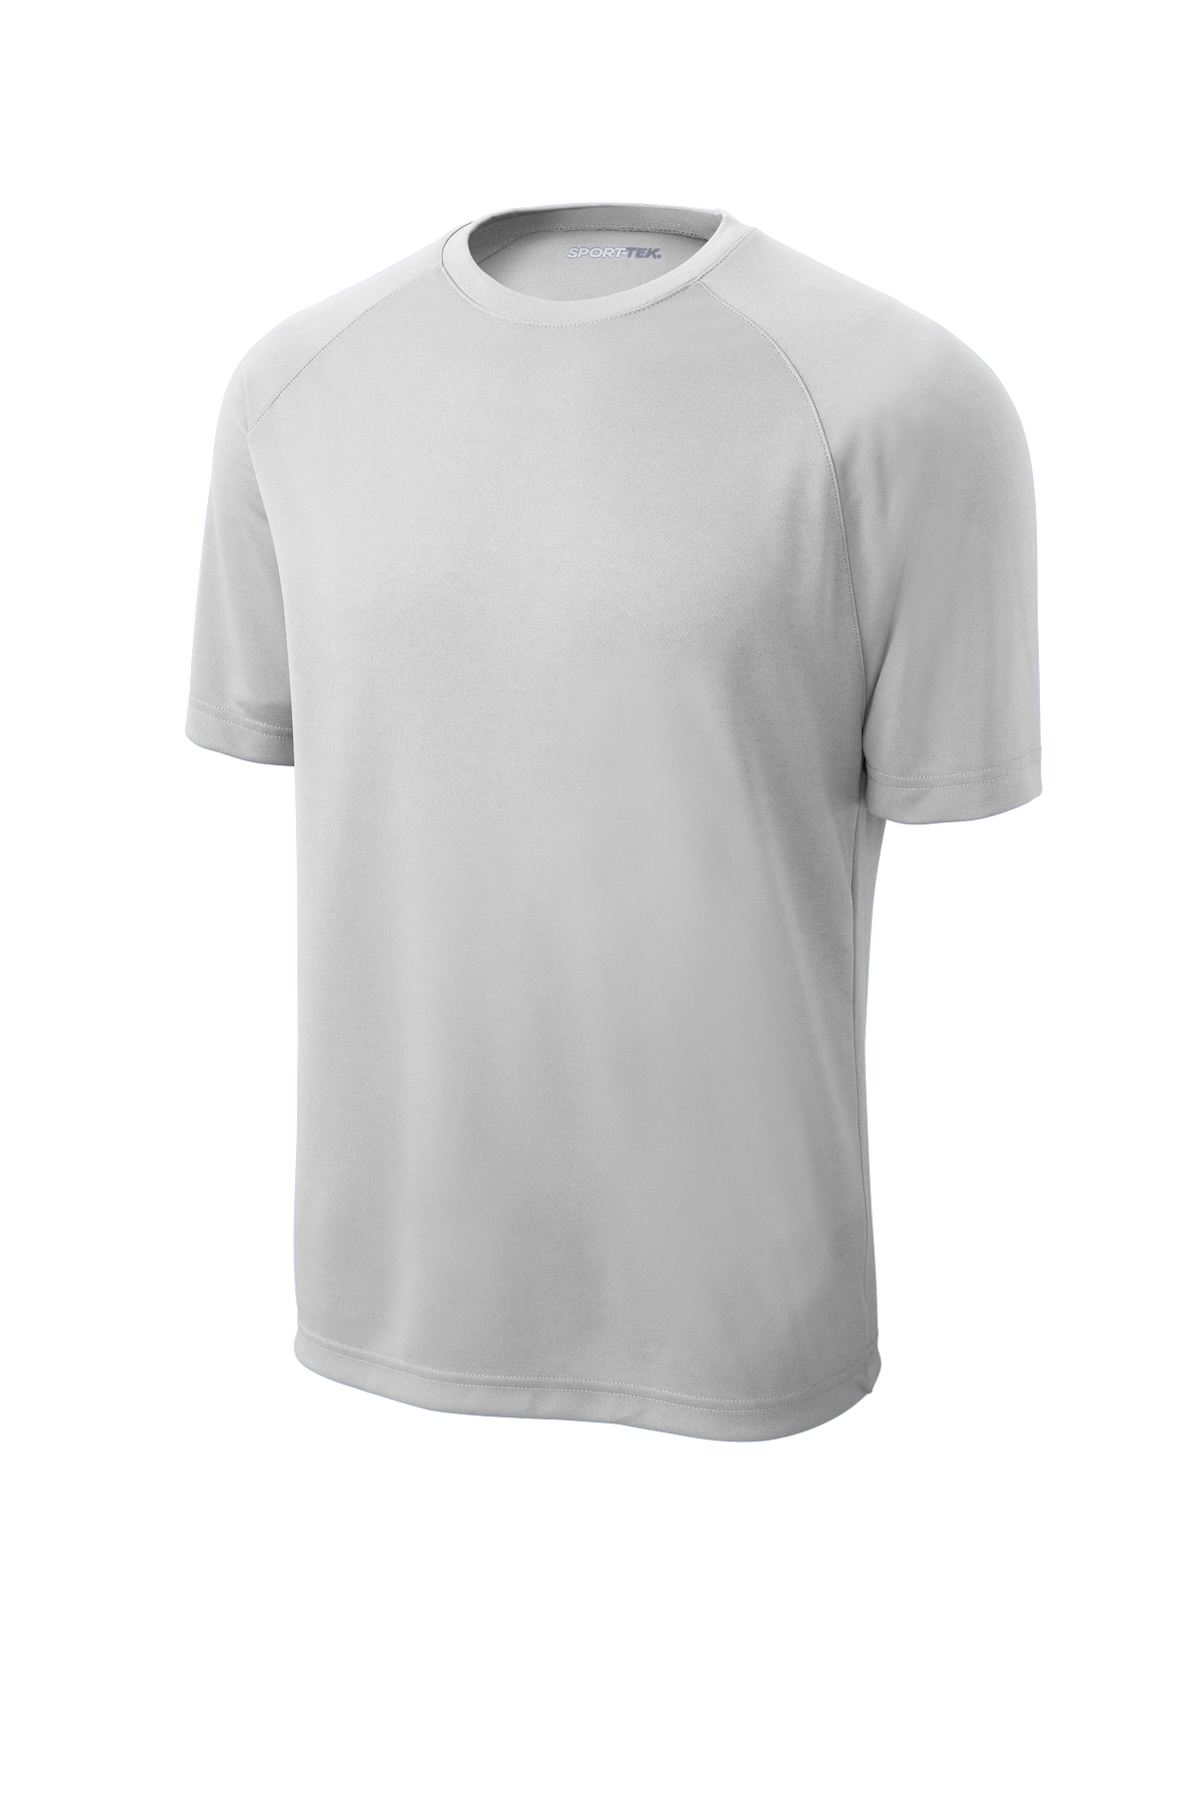 Sport-Tek Dry Zone Short Sleeve Raglan T-Shirt | Product | Sport-Tek